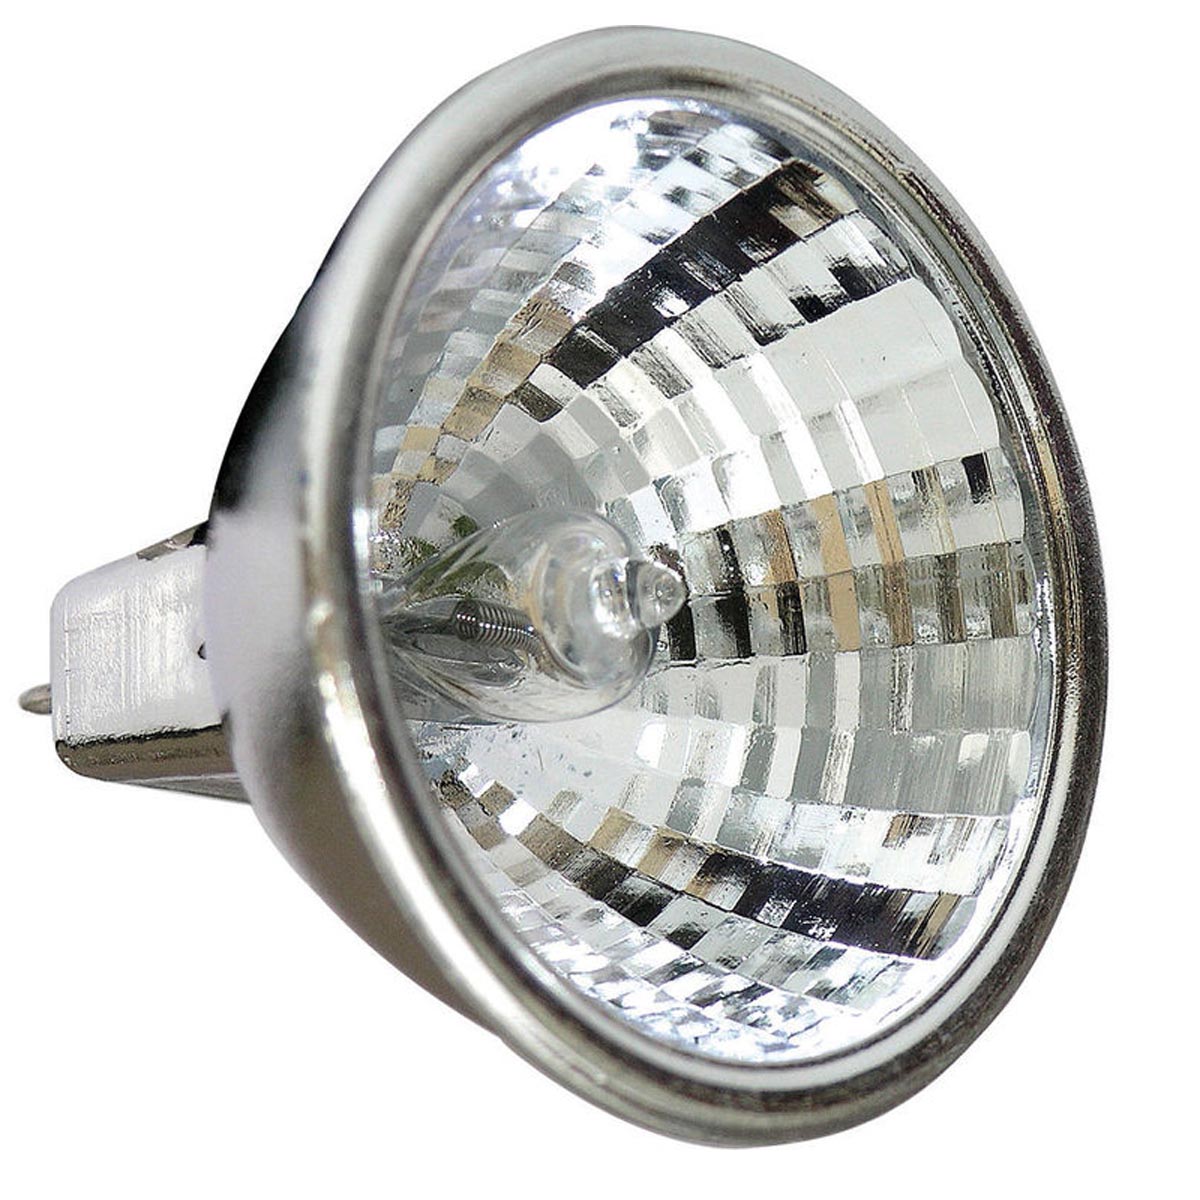 Frezzi EKP Mini-Fill Replacement Lamp - Picture 1 of 1